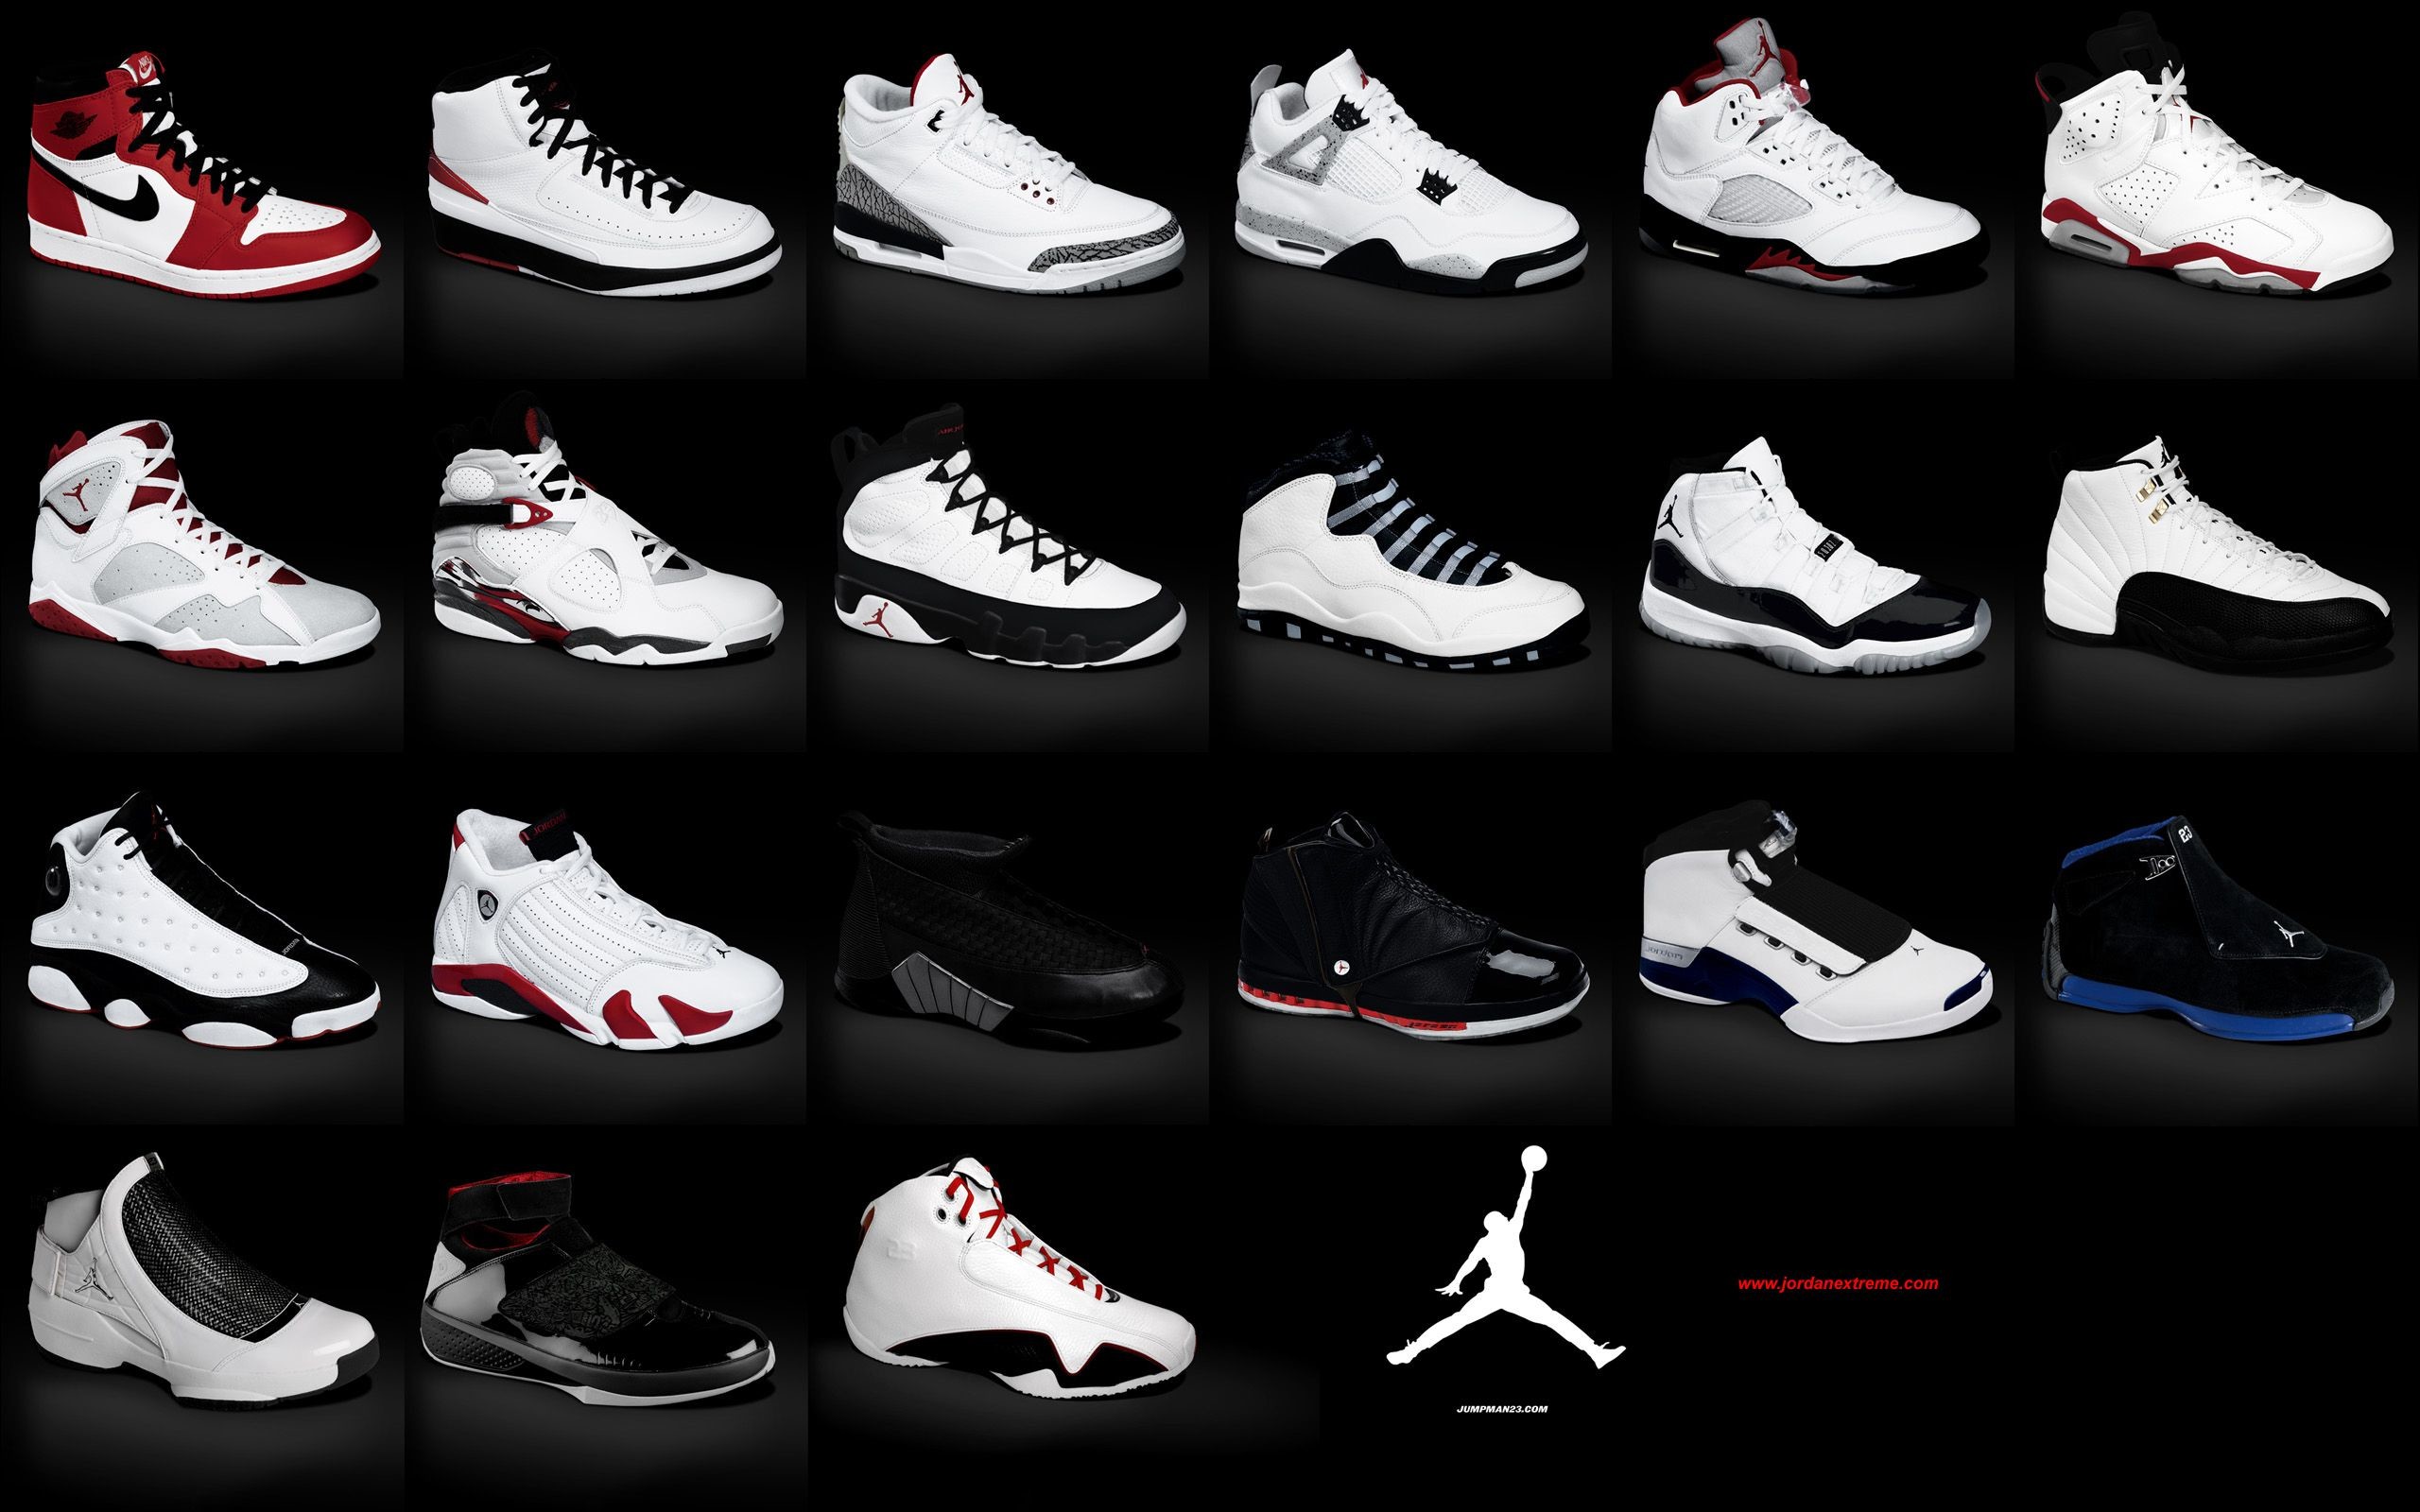 2560x1600, Jumpman23 - Jordan Shoes 1 To 13 - HD Wallpaper 